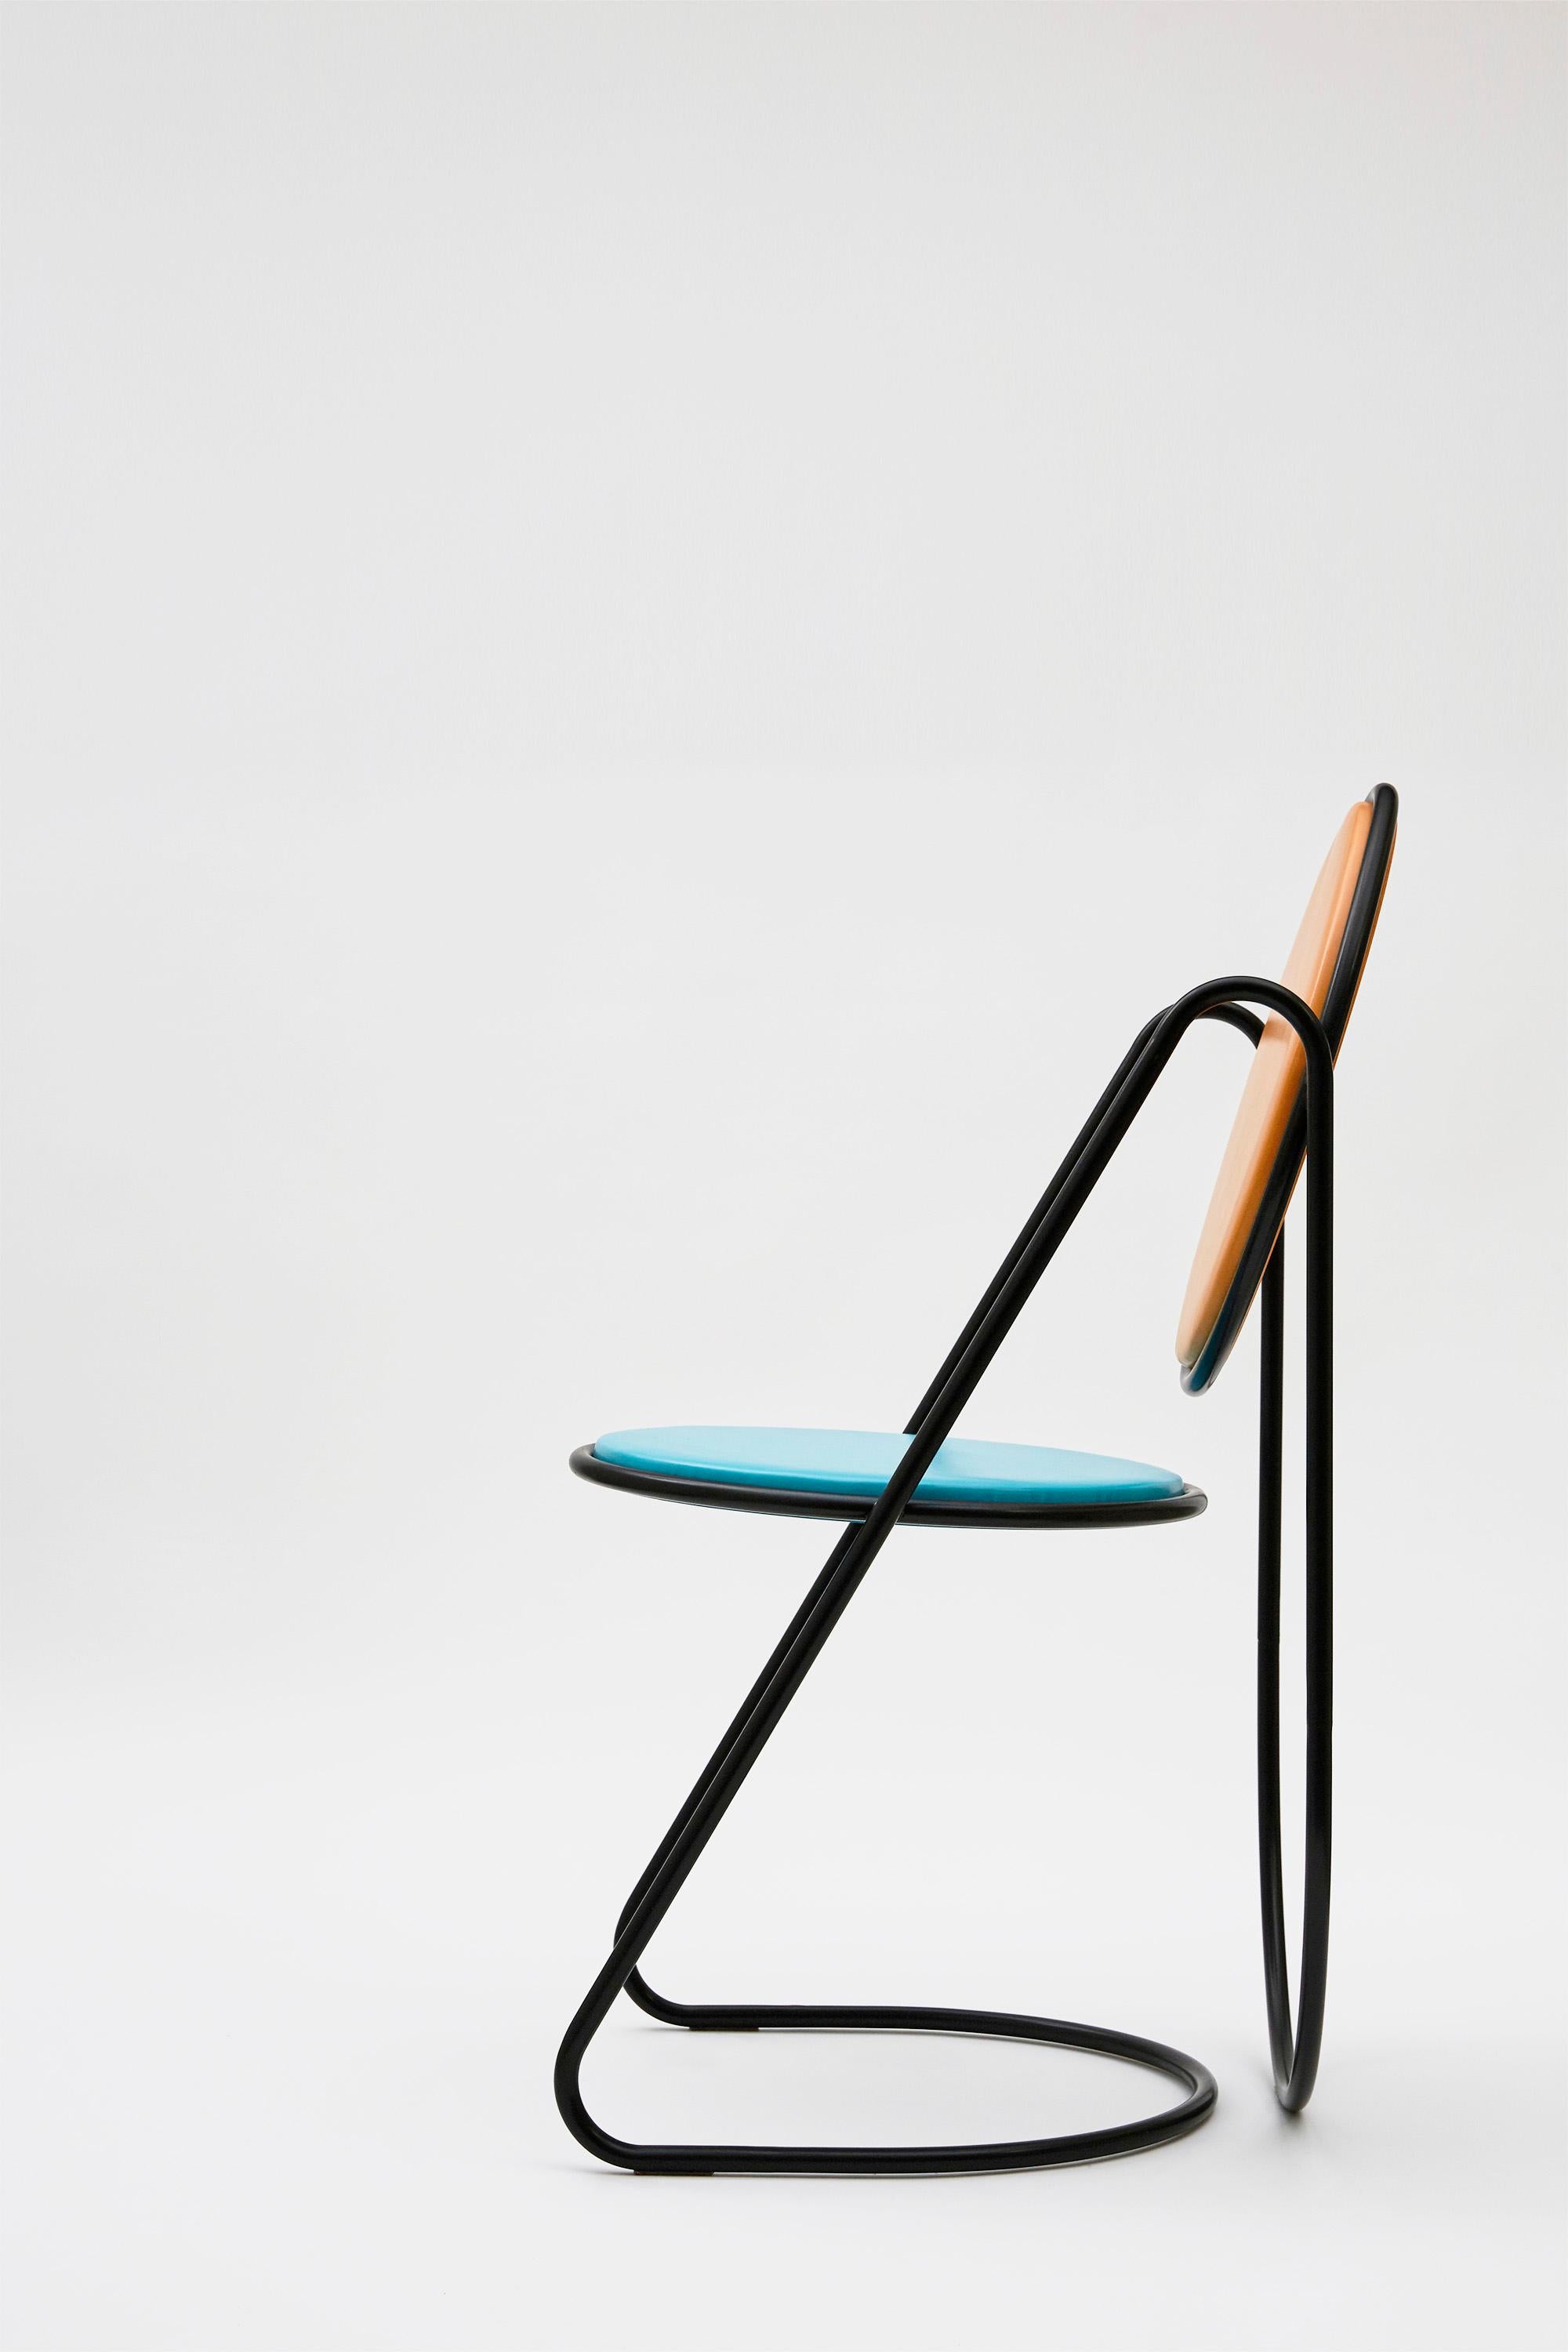 Italian U-Disk Chair, Black, Orange & Light Blue For Sale